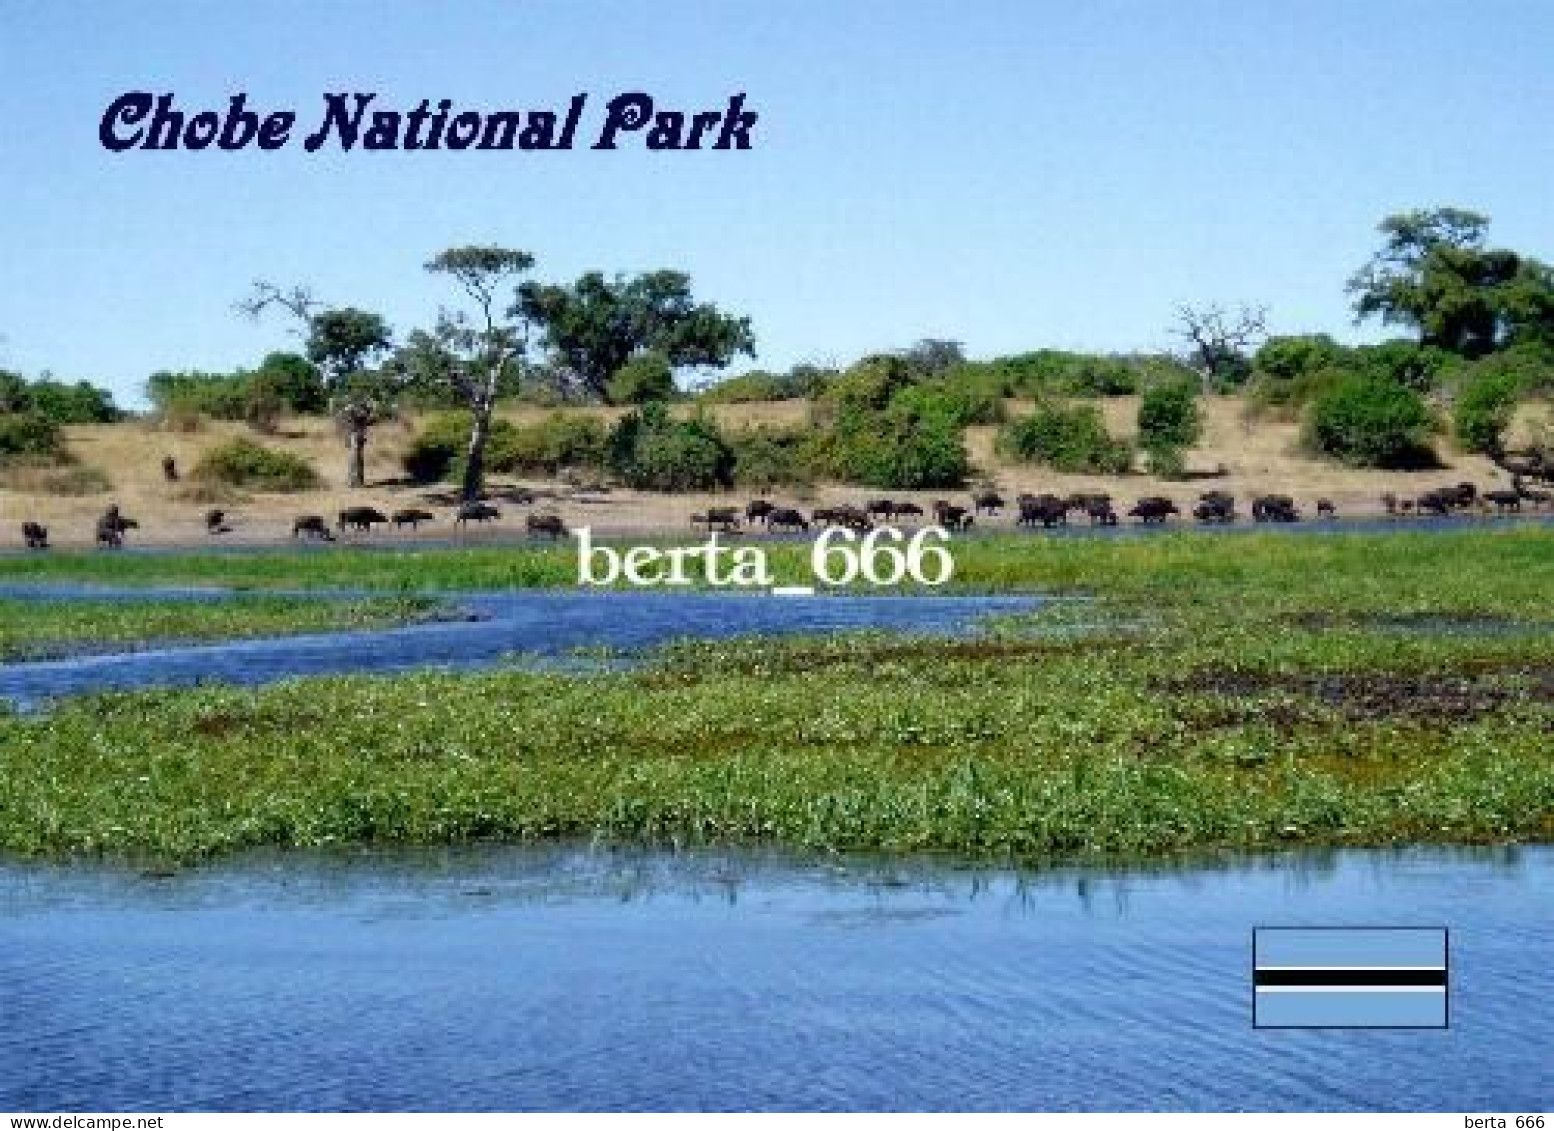 Botswana Chobe National Park New Postcard - Botswana